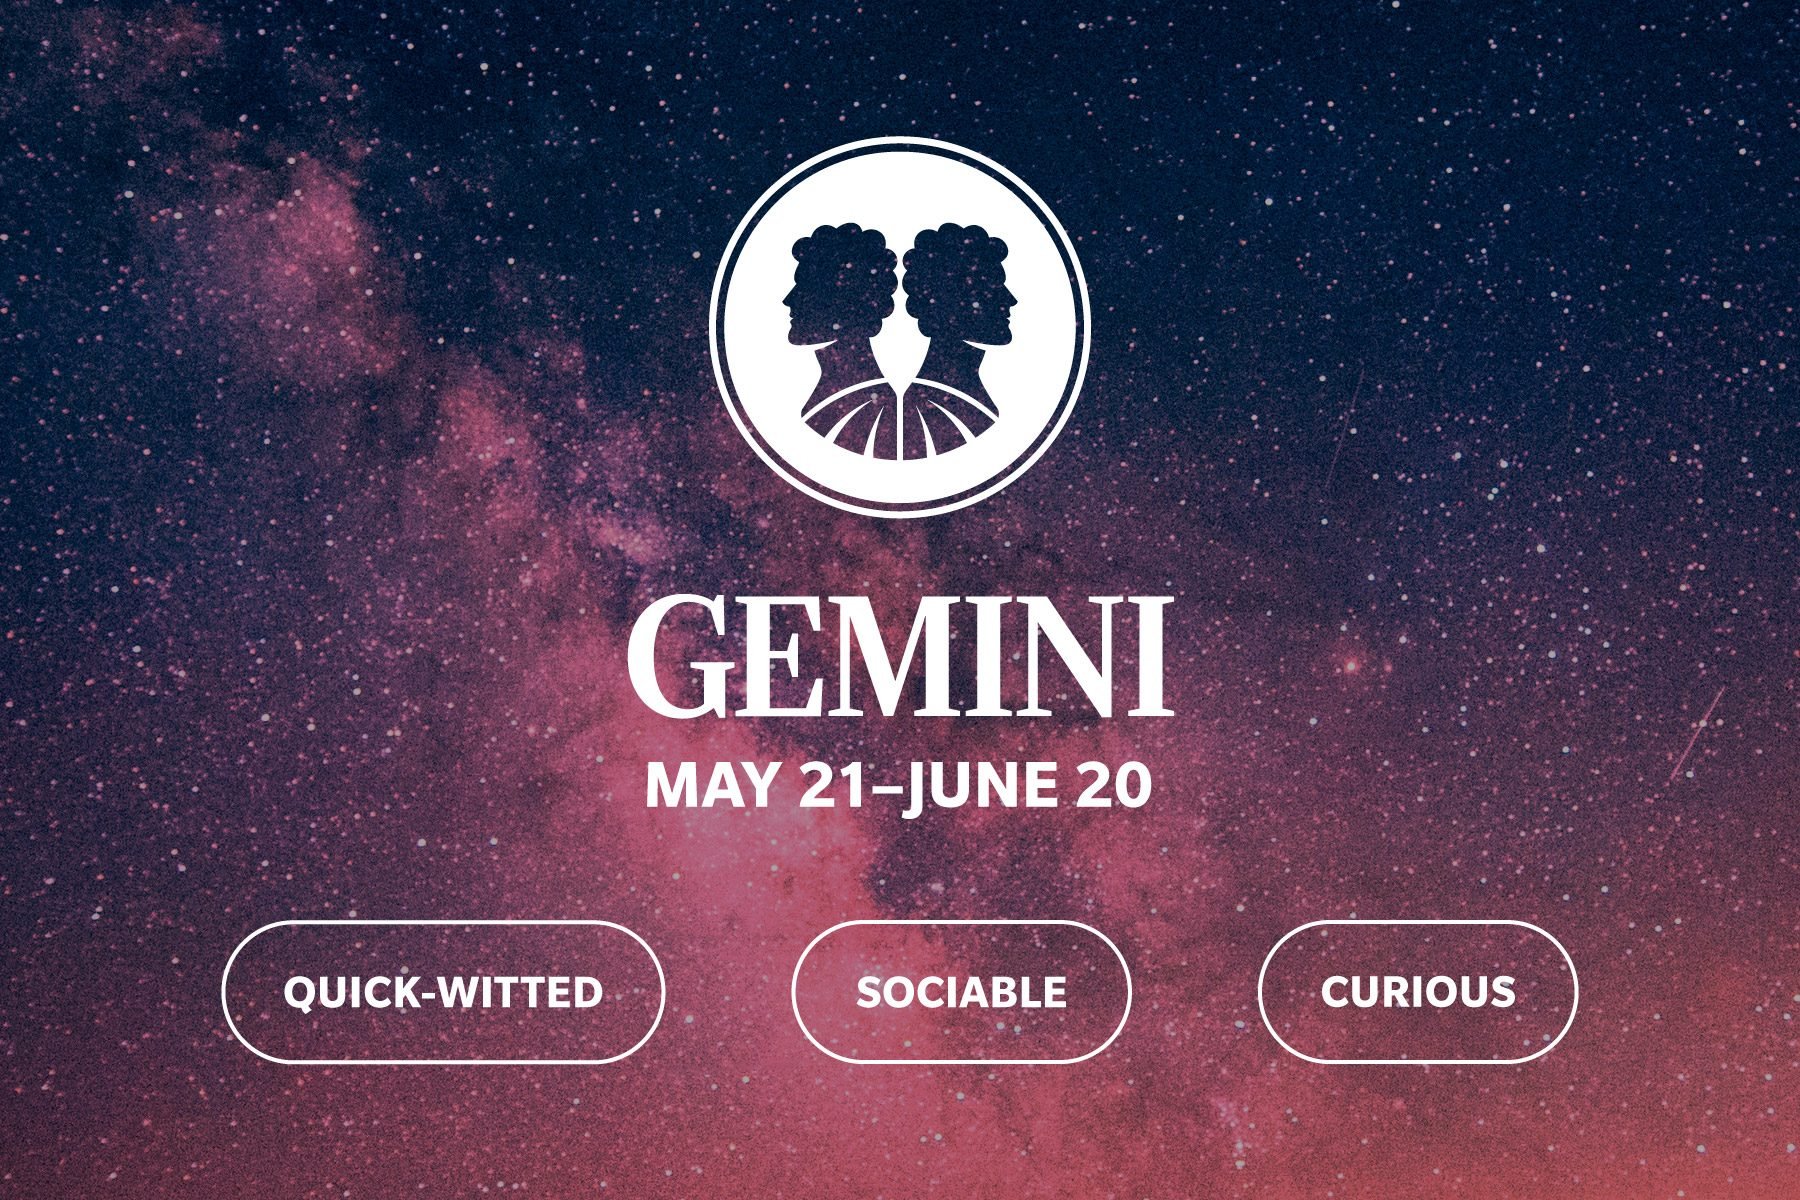 Zodiac sign qualities on galaxy background GEMINI